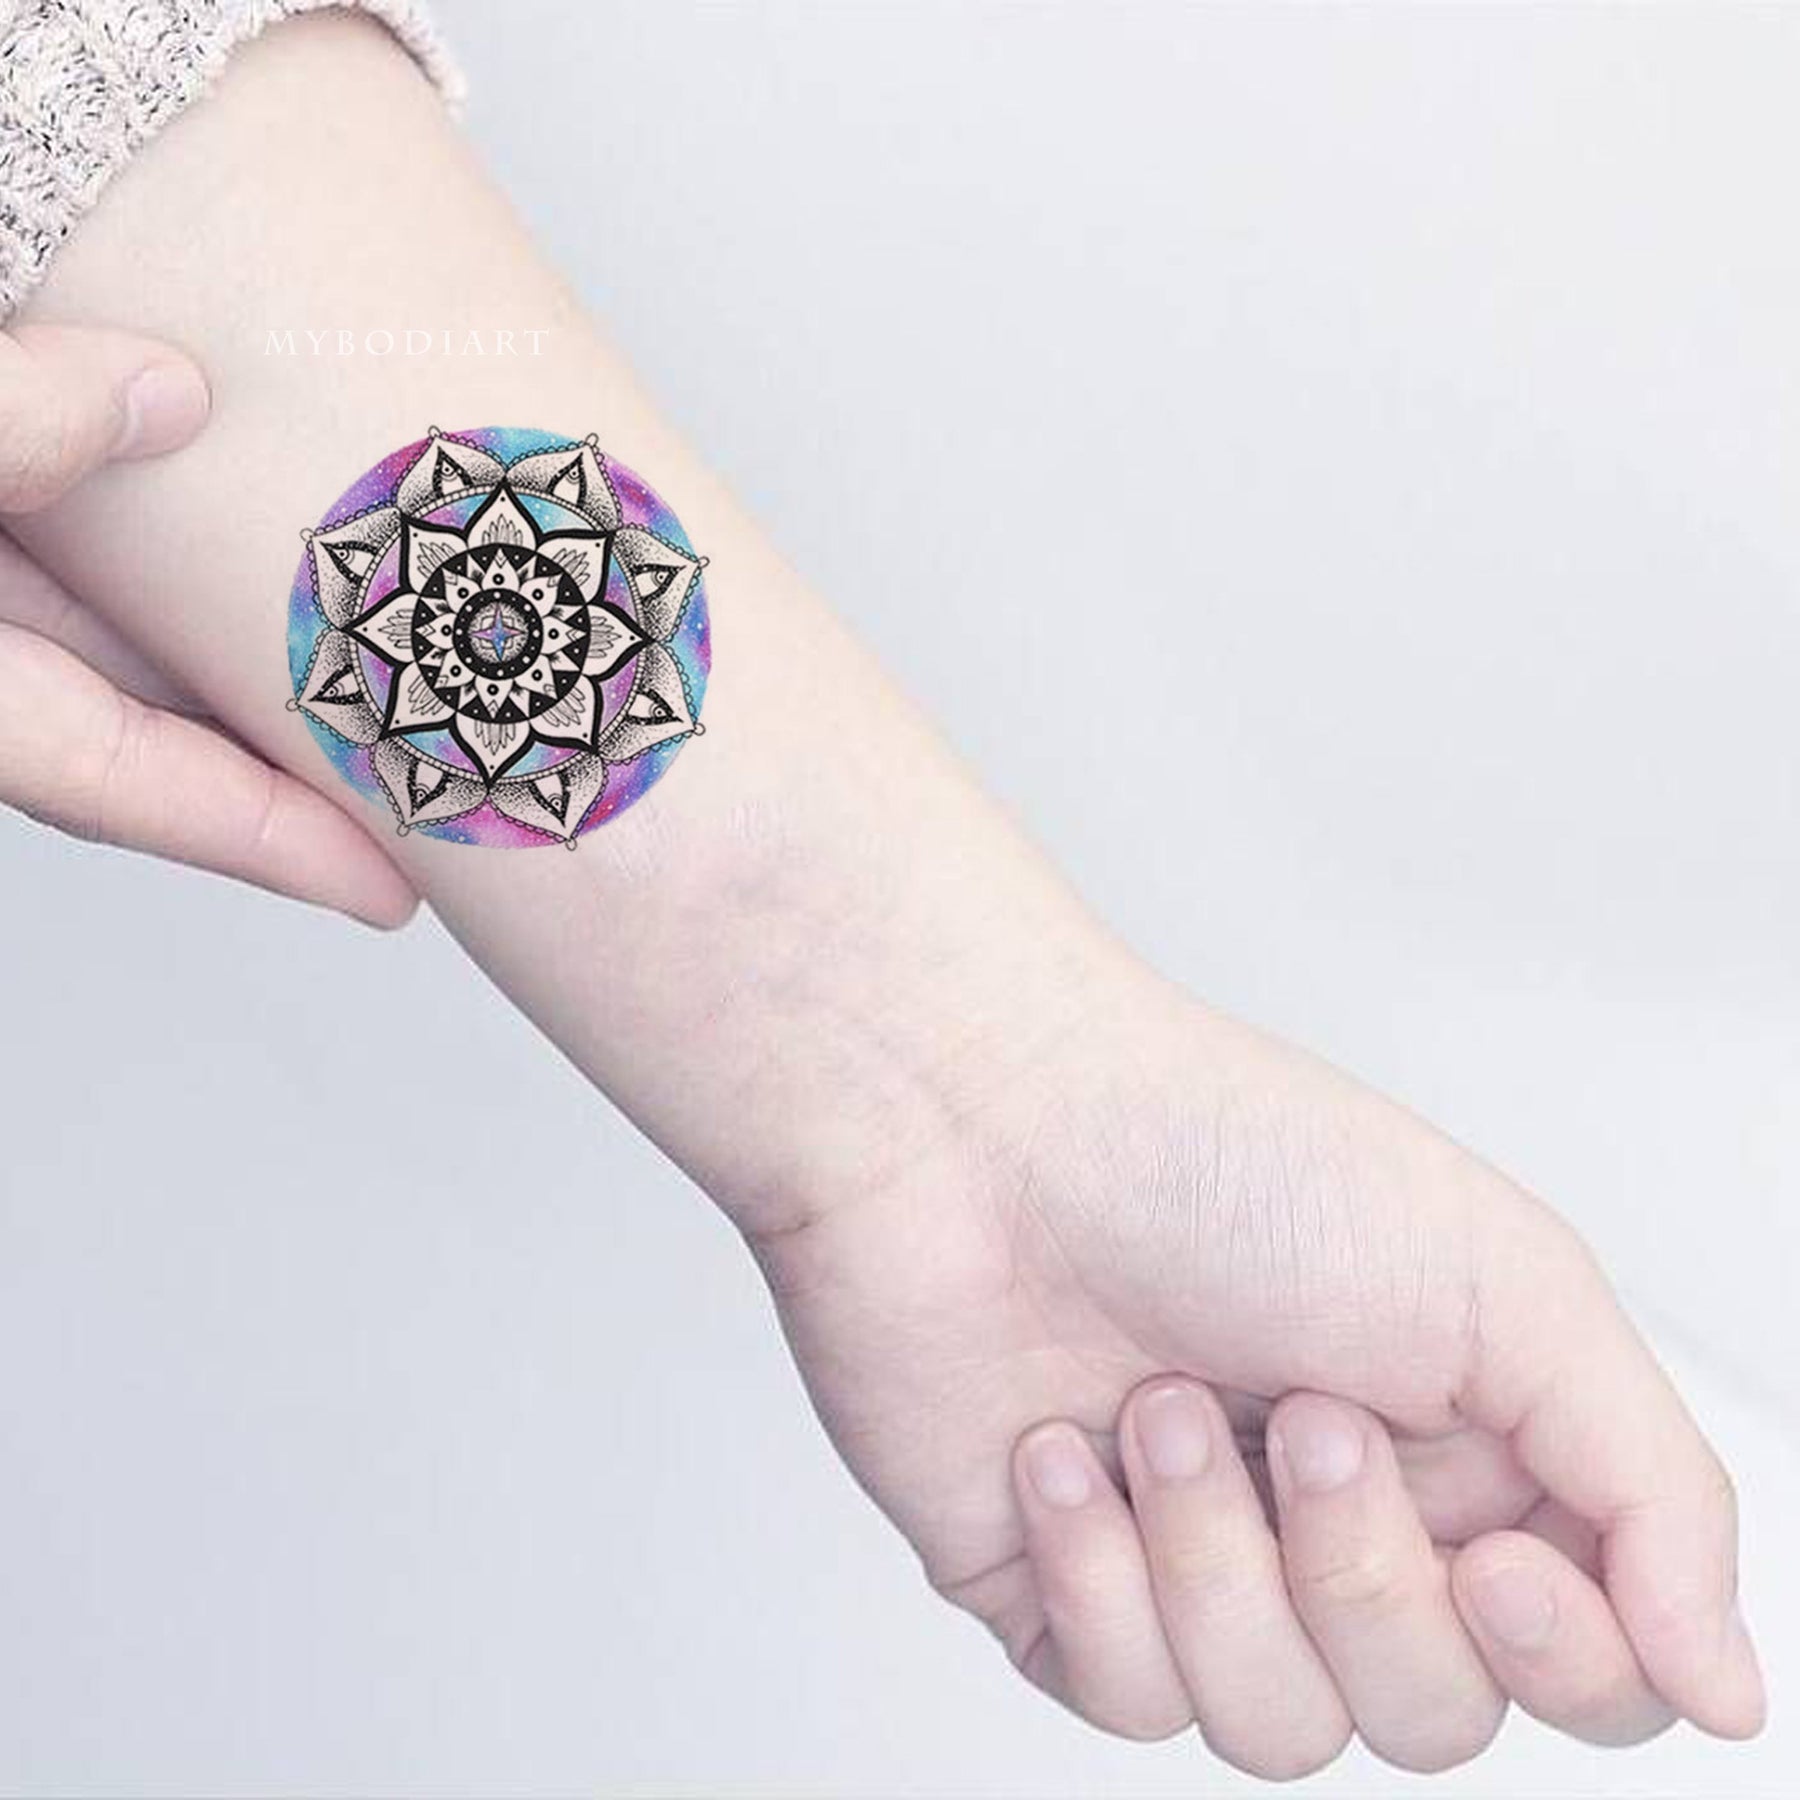 Mandala Tattoos - watch inspiring examples | Cartel Tattoo